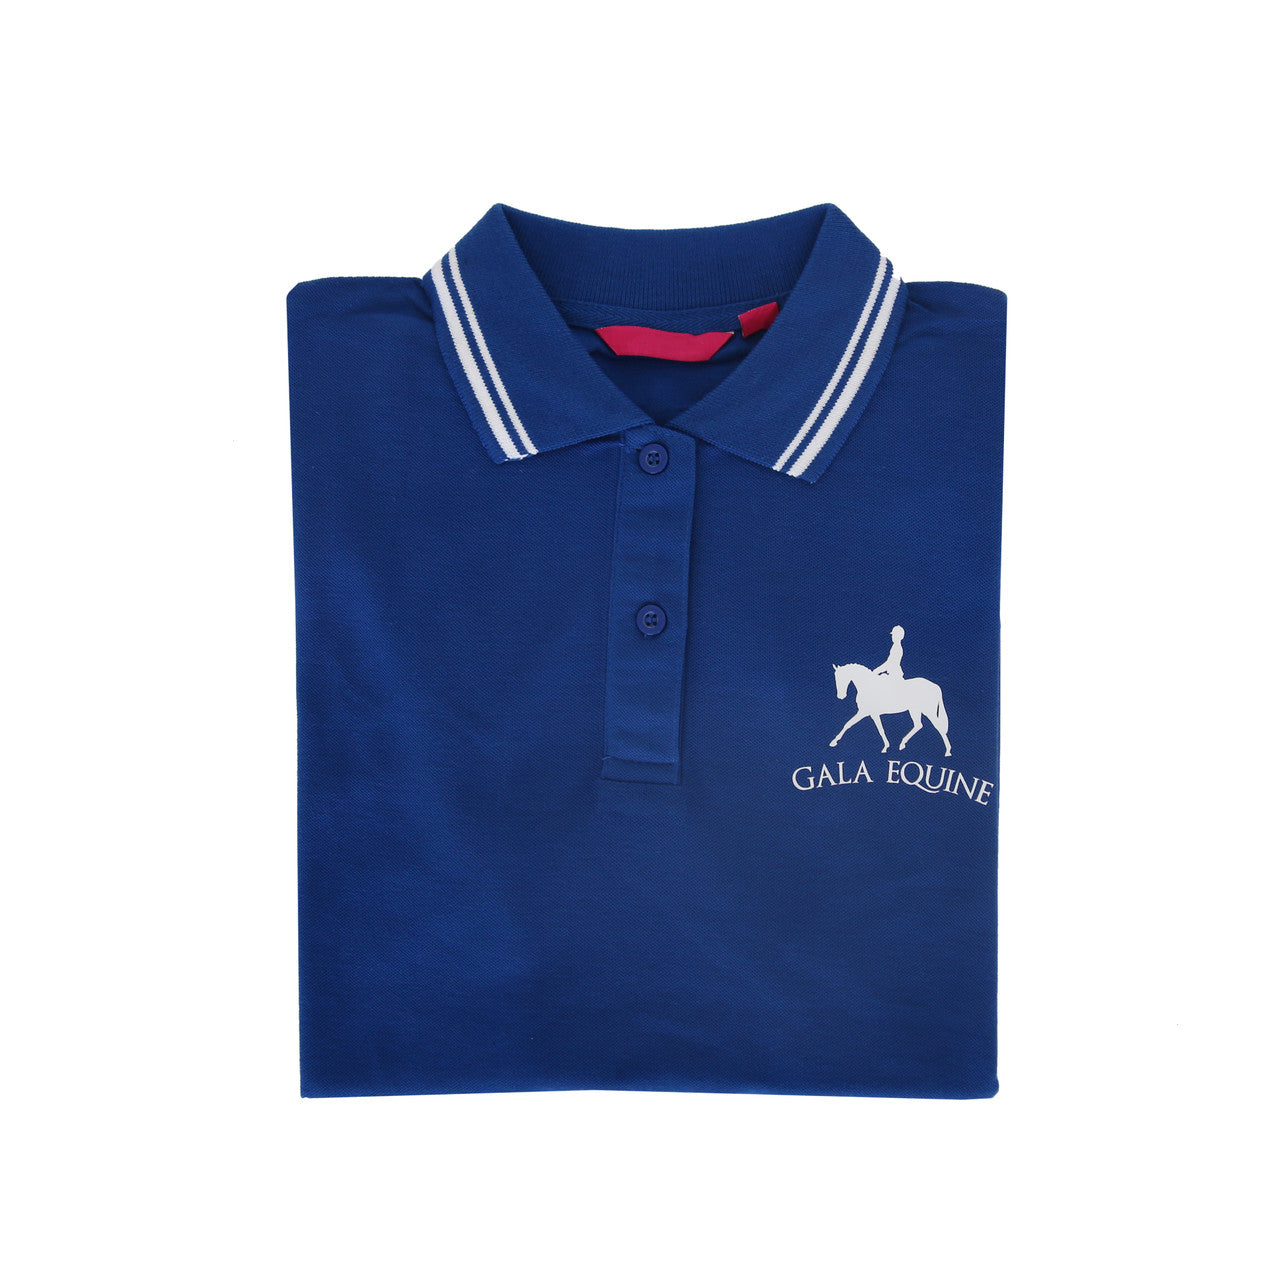 Gala Equine Polo - Royal Blue - CLEARANCE